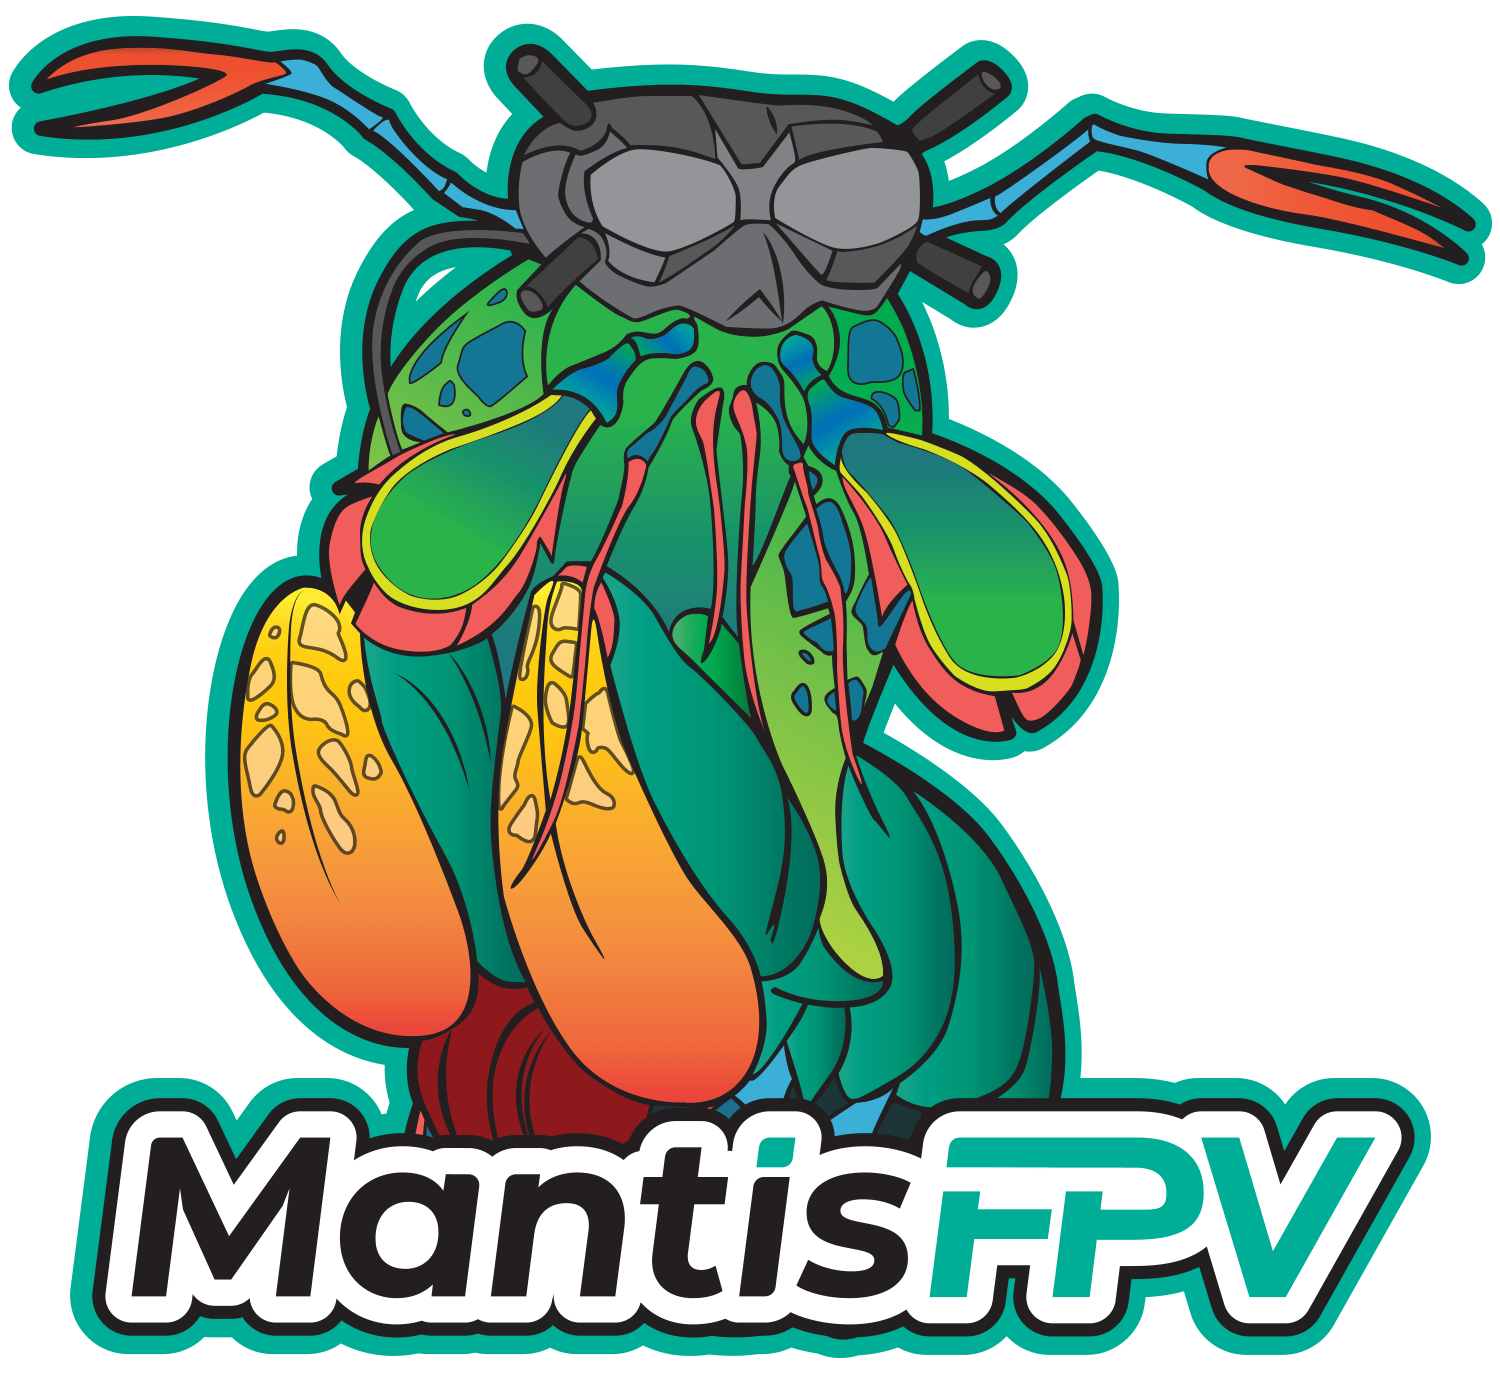 MantisFPV logo sticker mascot 1500w 2021